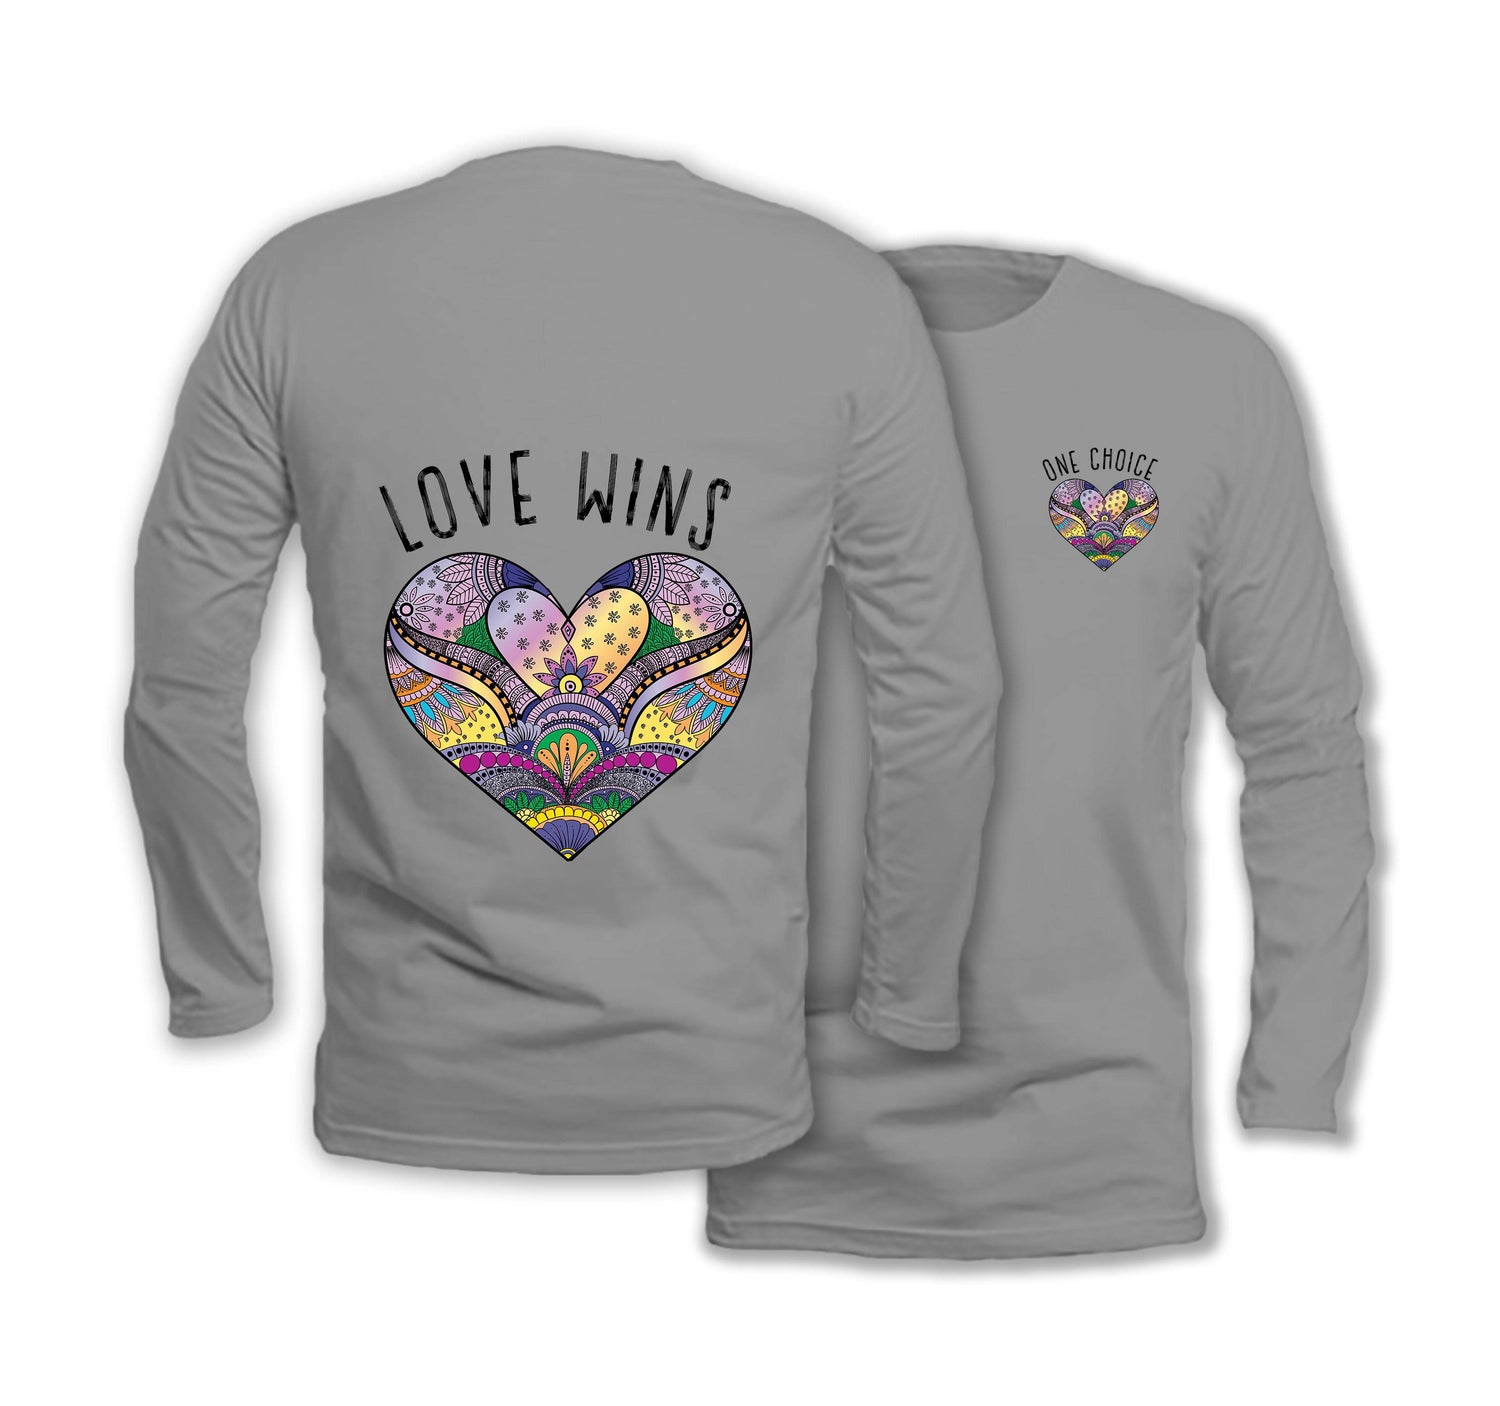 Love Wins - Long Sleeve Organic Cotton T-Shirt - One Choice Apparel